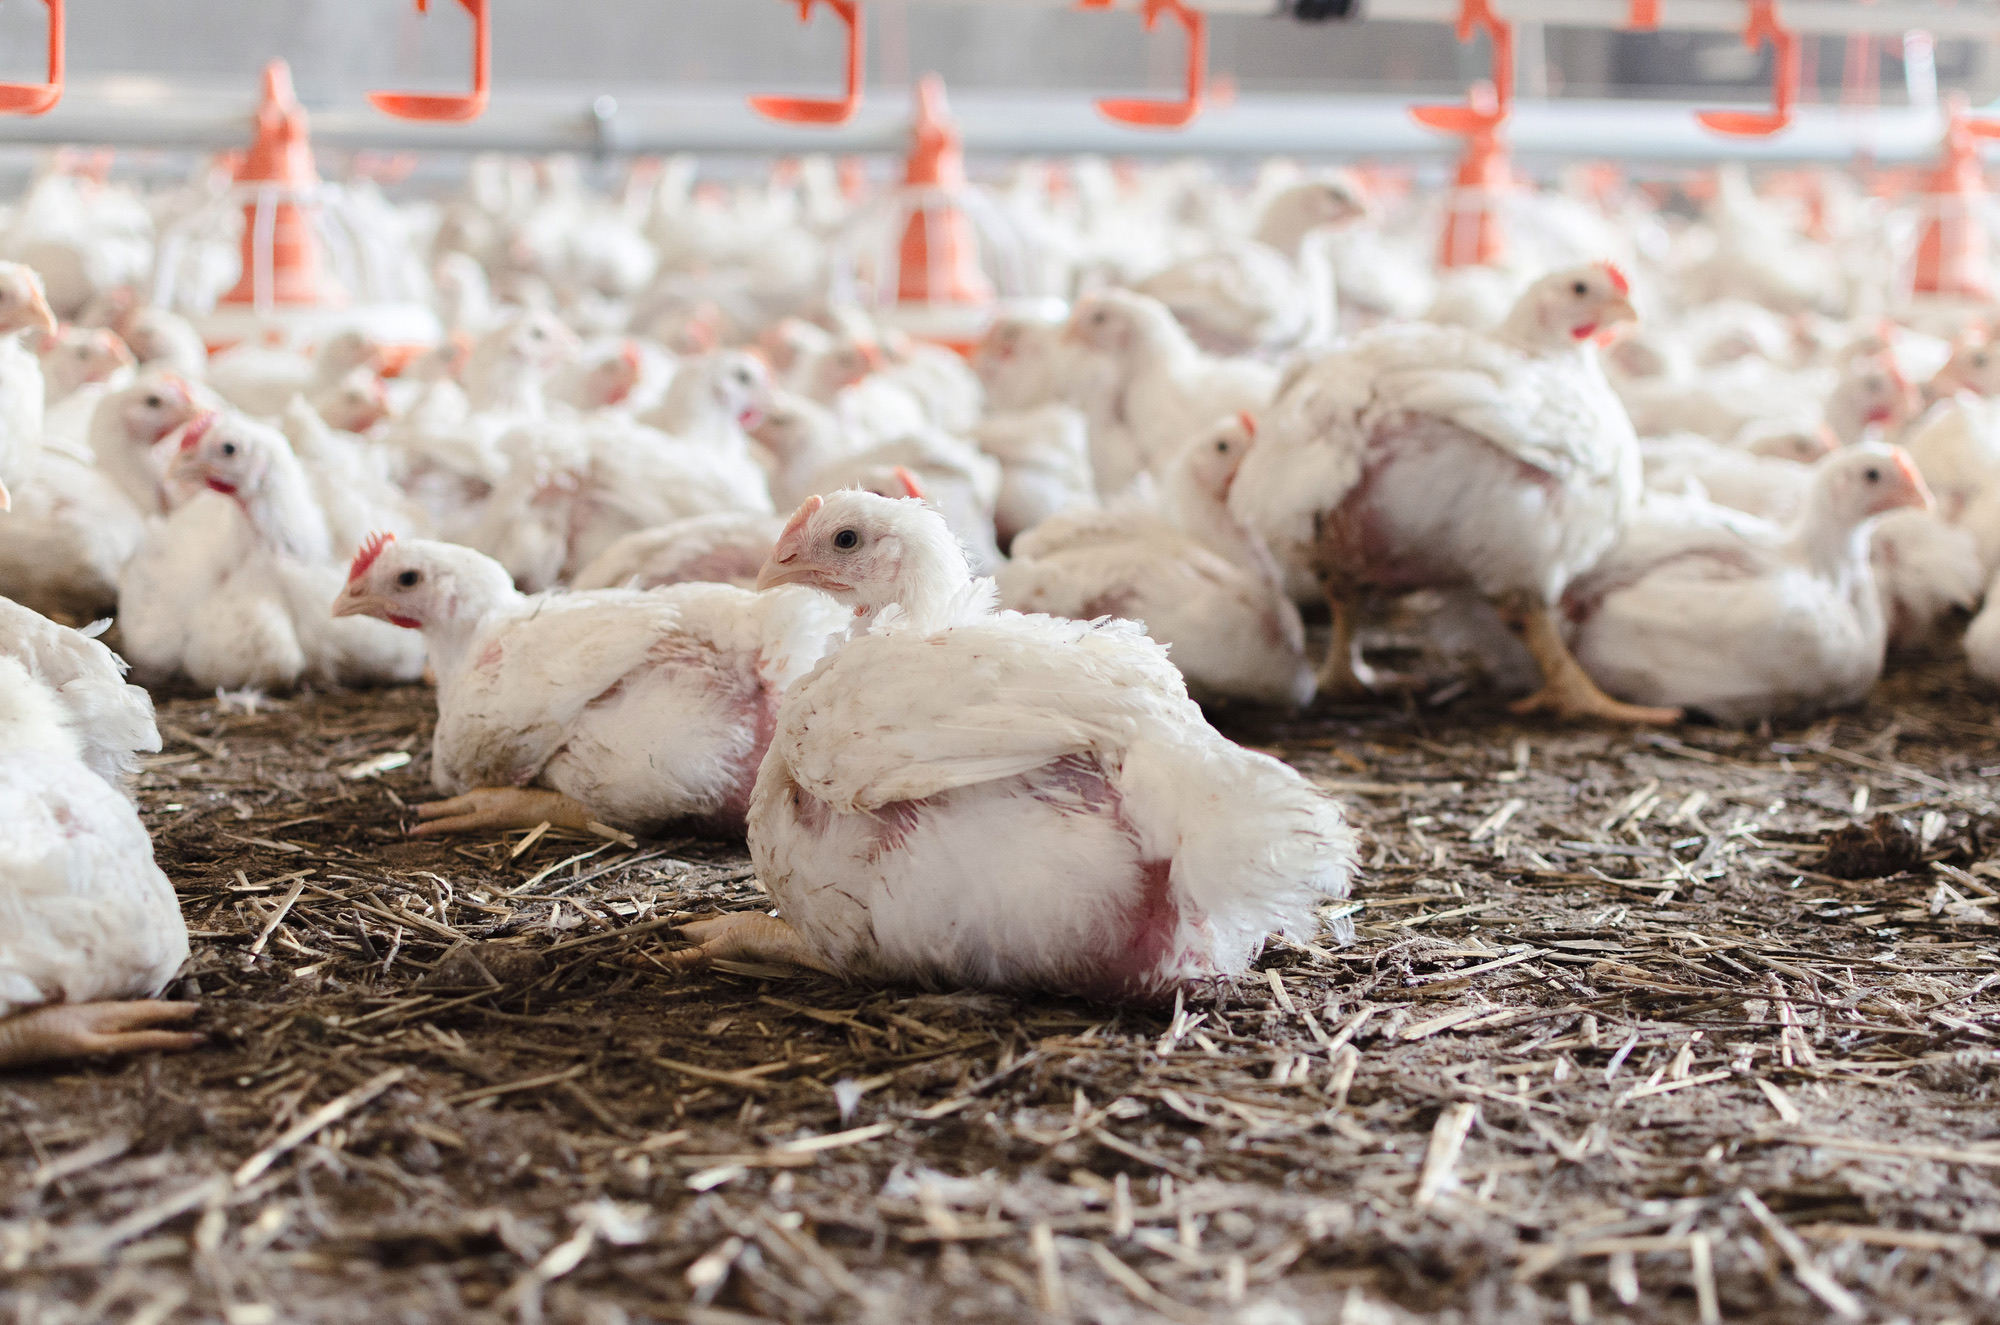 Indoors chicken farm, chicken feeding in factory.